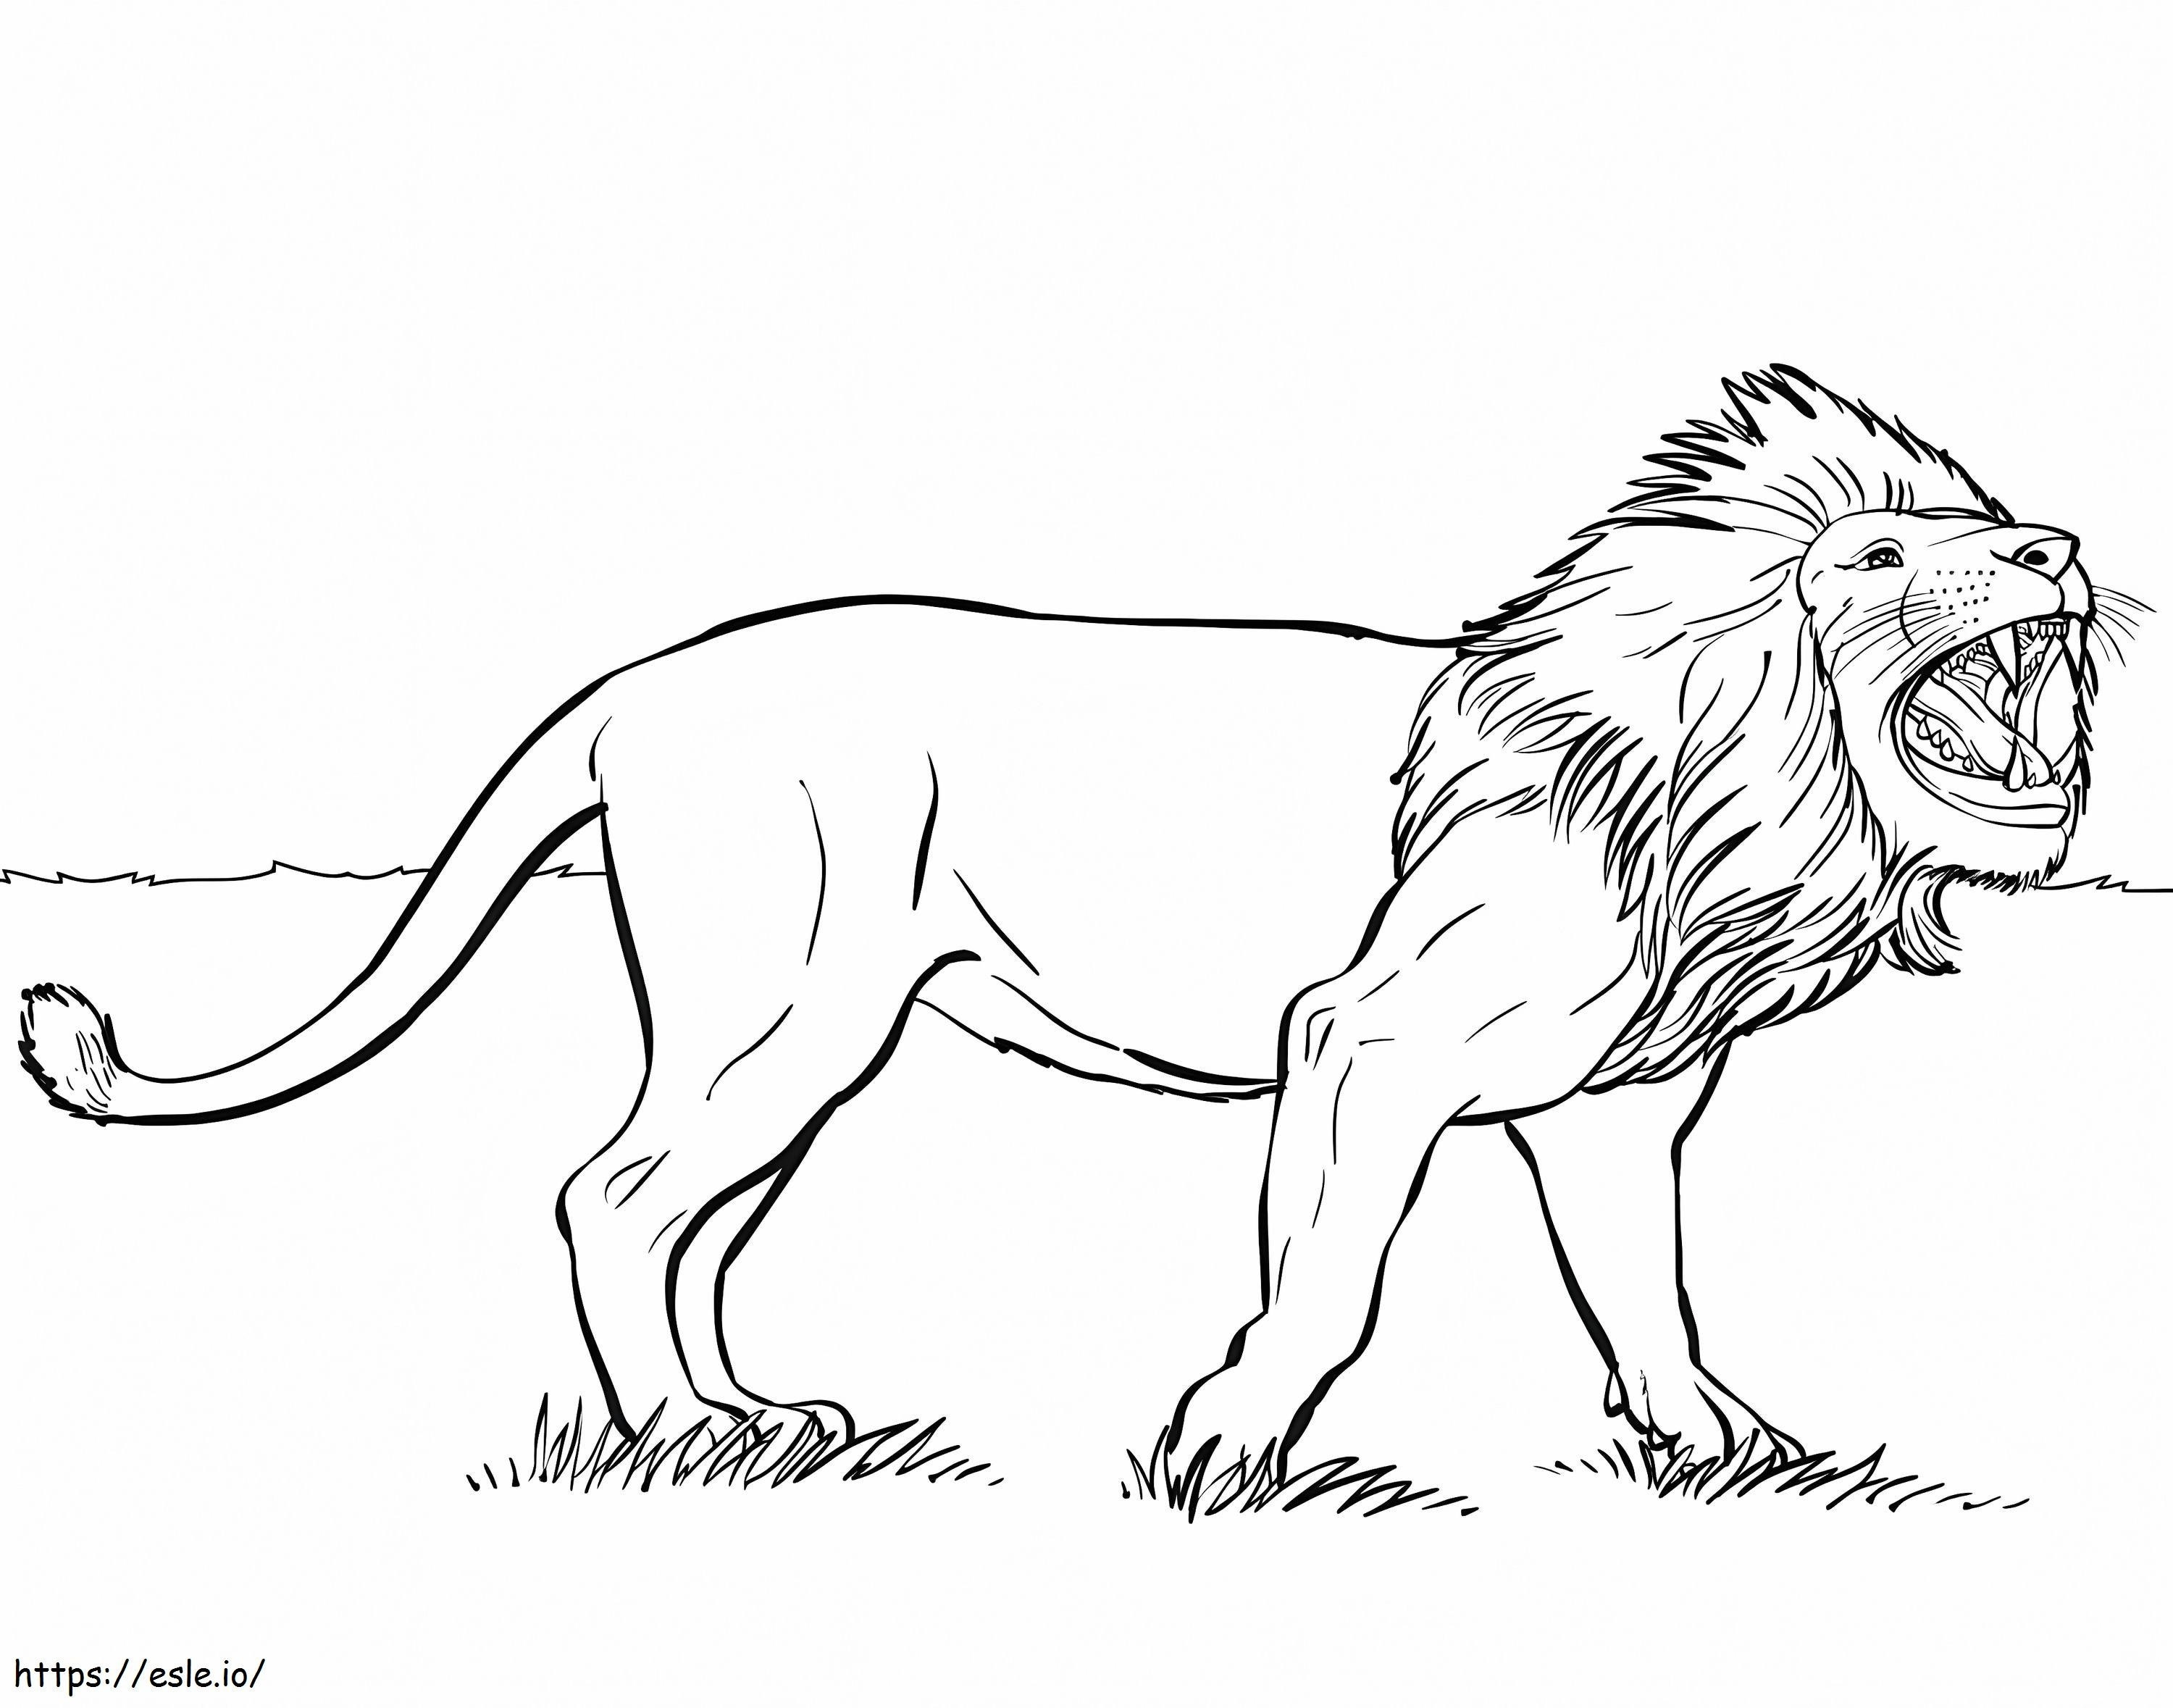 Leão que ruge para colorir